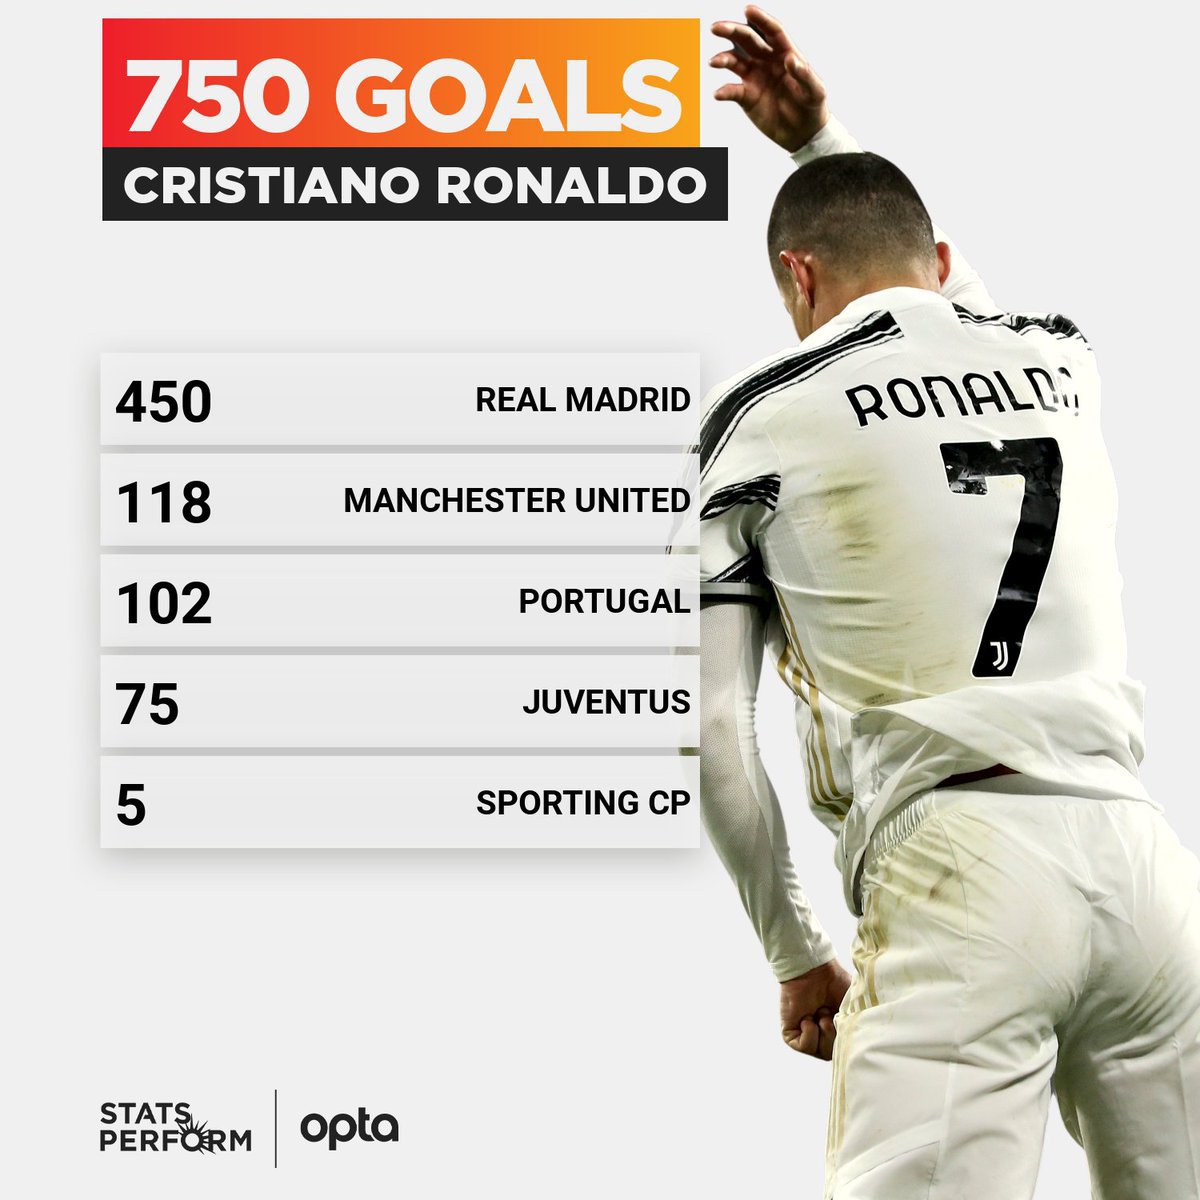 "750 happy moments" Cristiano Ronaldo celebrates 750 career goals